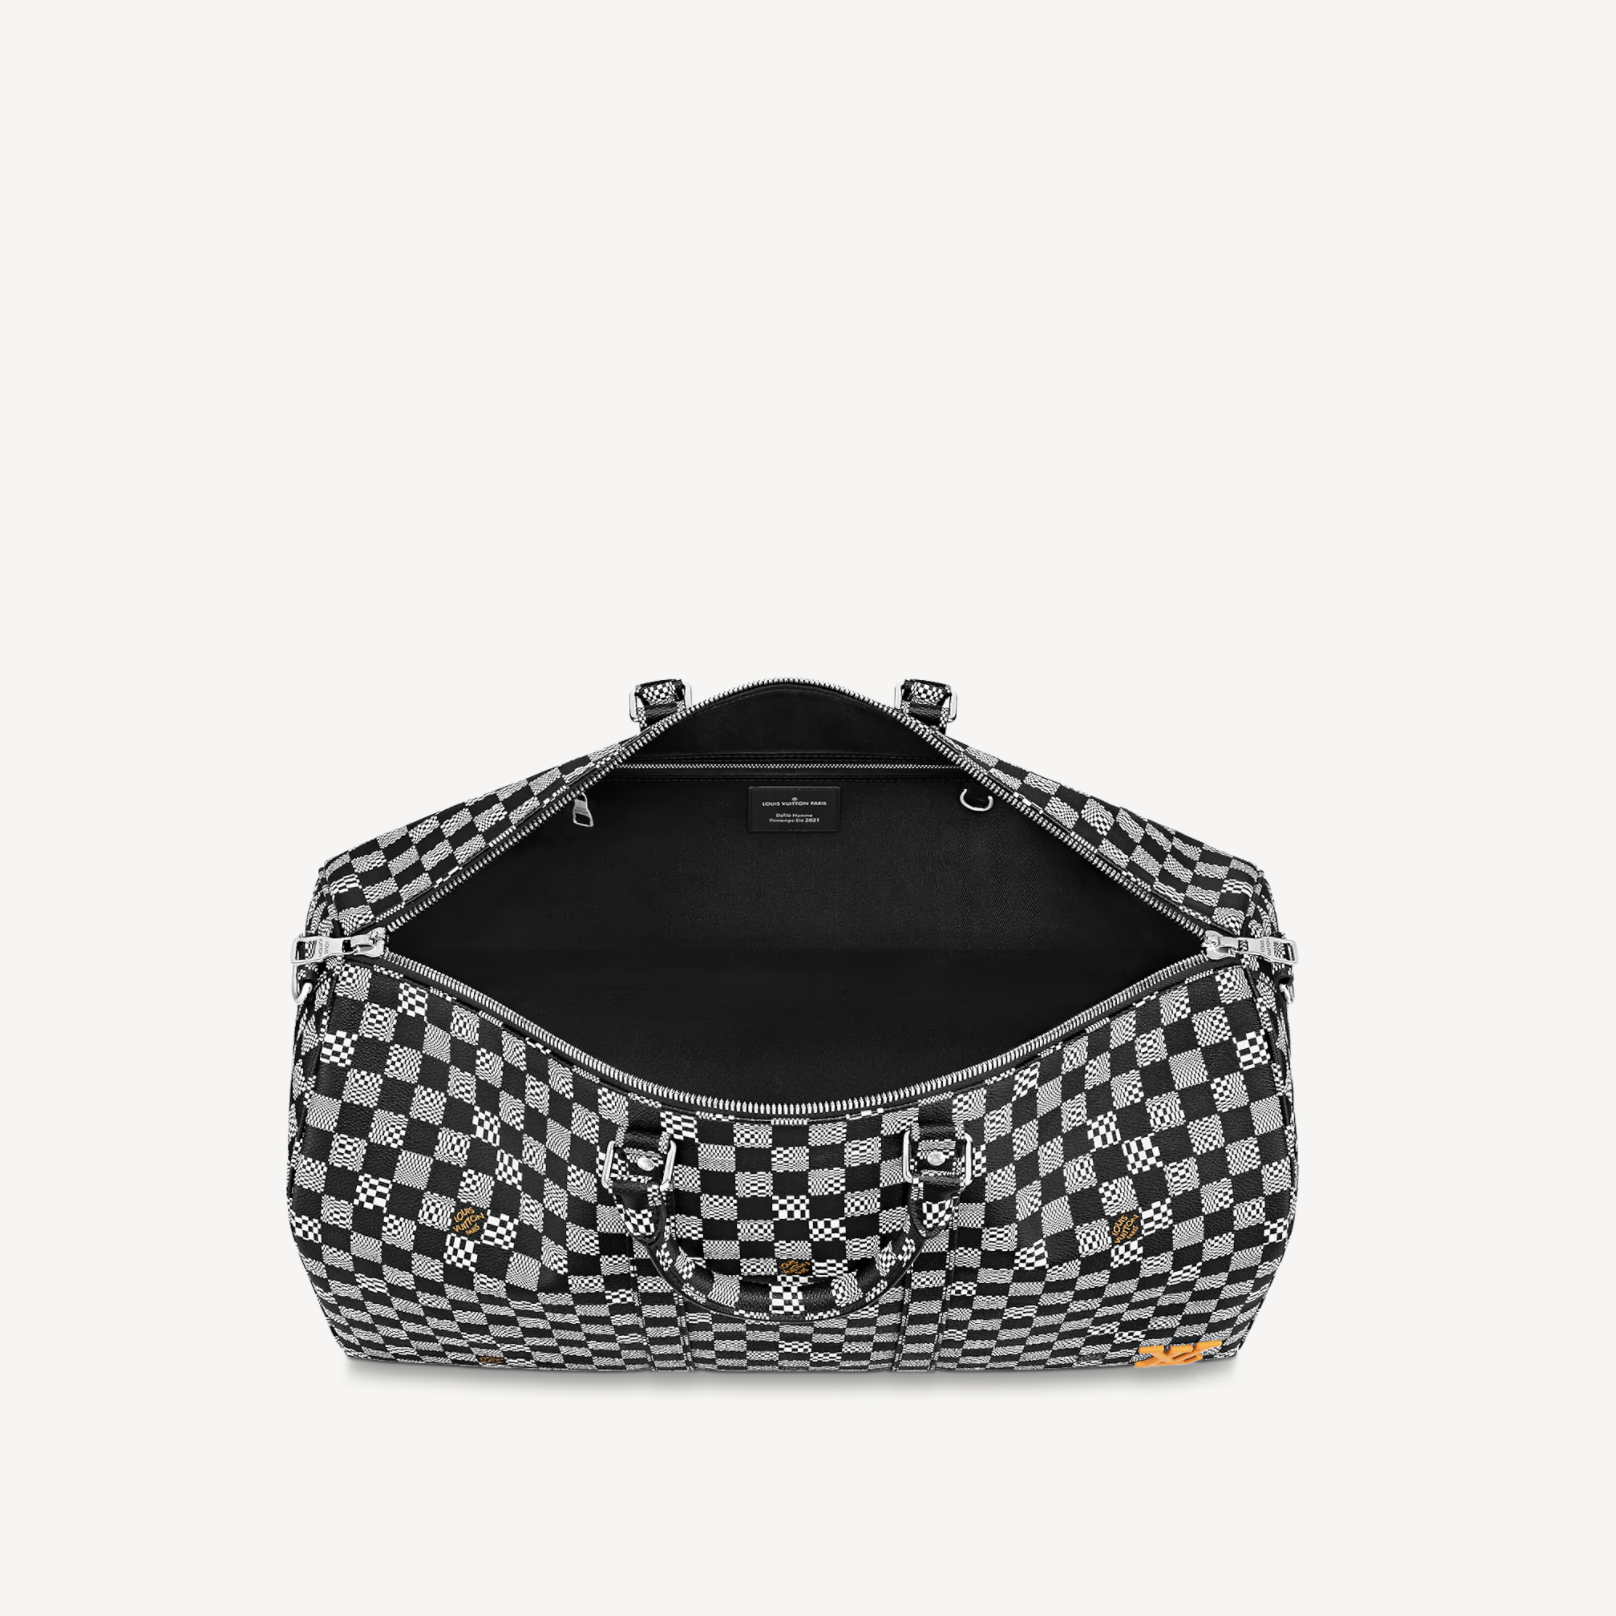 Louis Vuitton Mini Luggage Damier BB Black/White in Coated Canvas